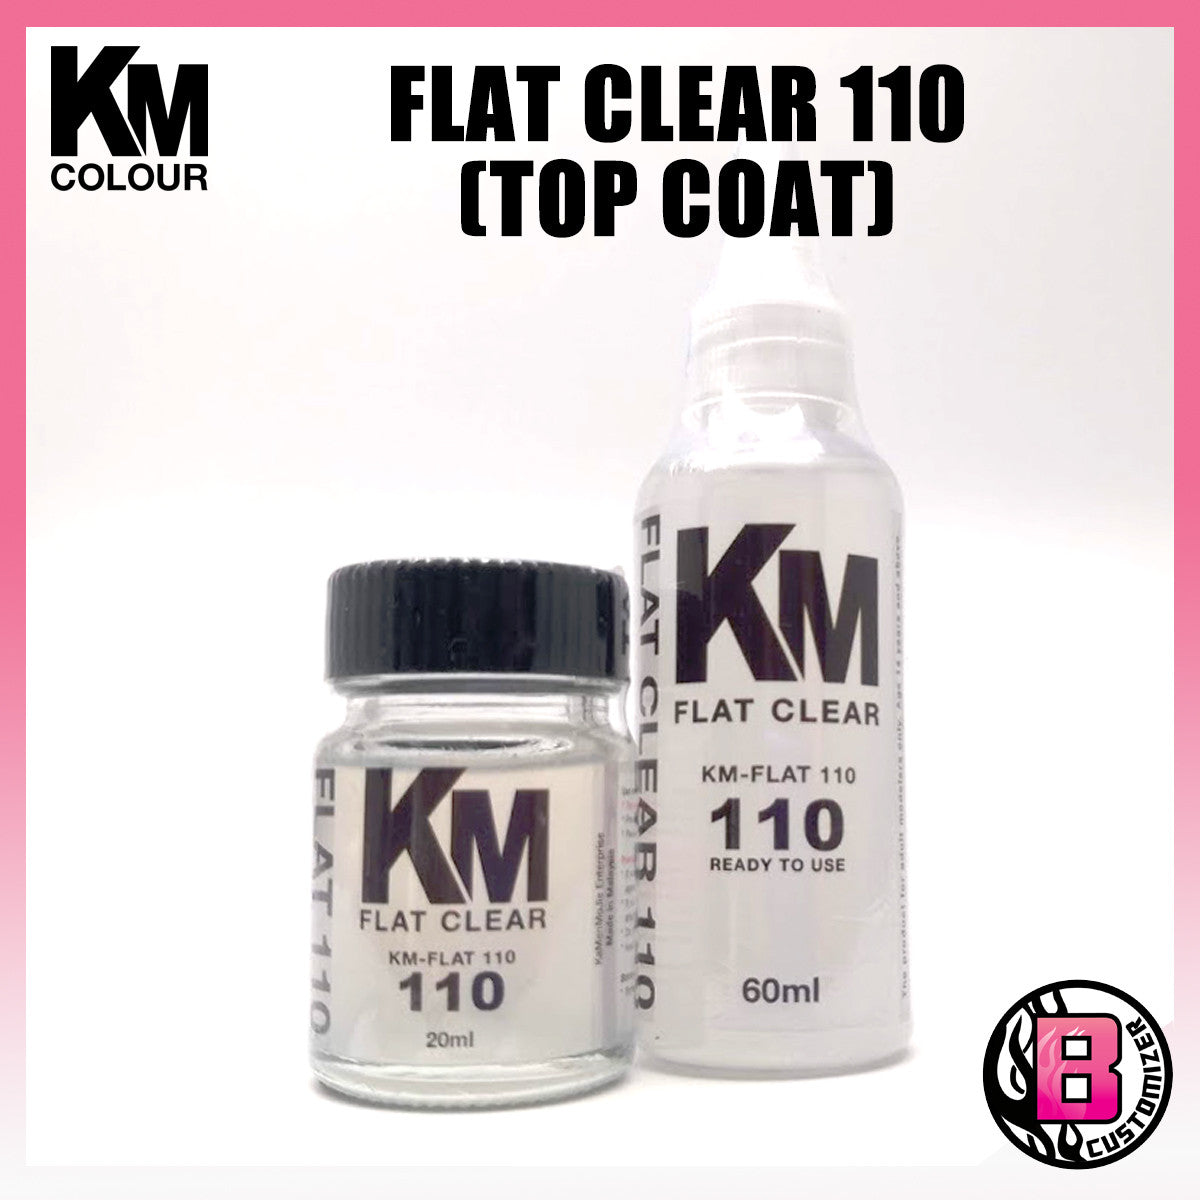 KM Colour Flat Clear 110 (Top Coat)